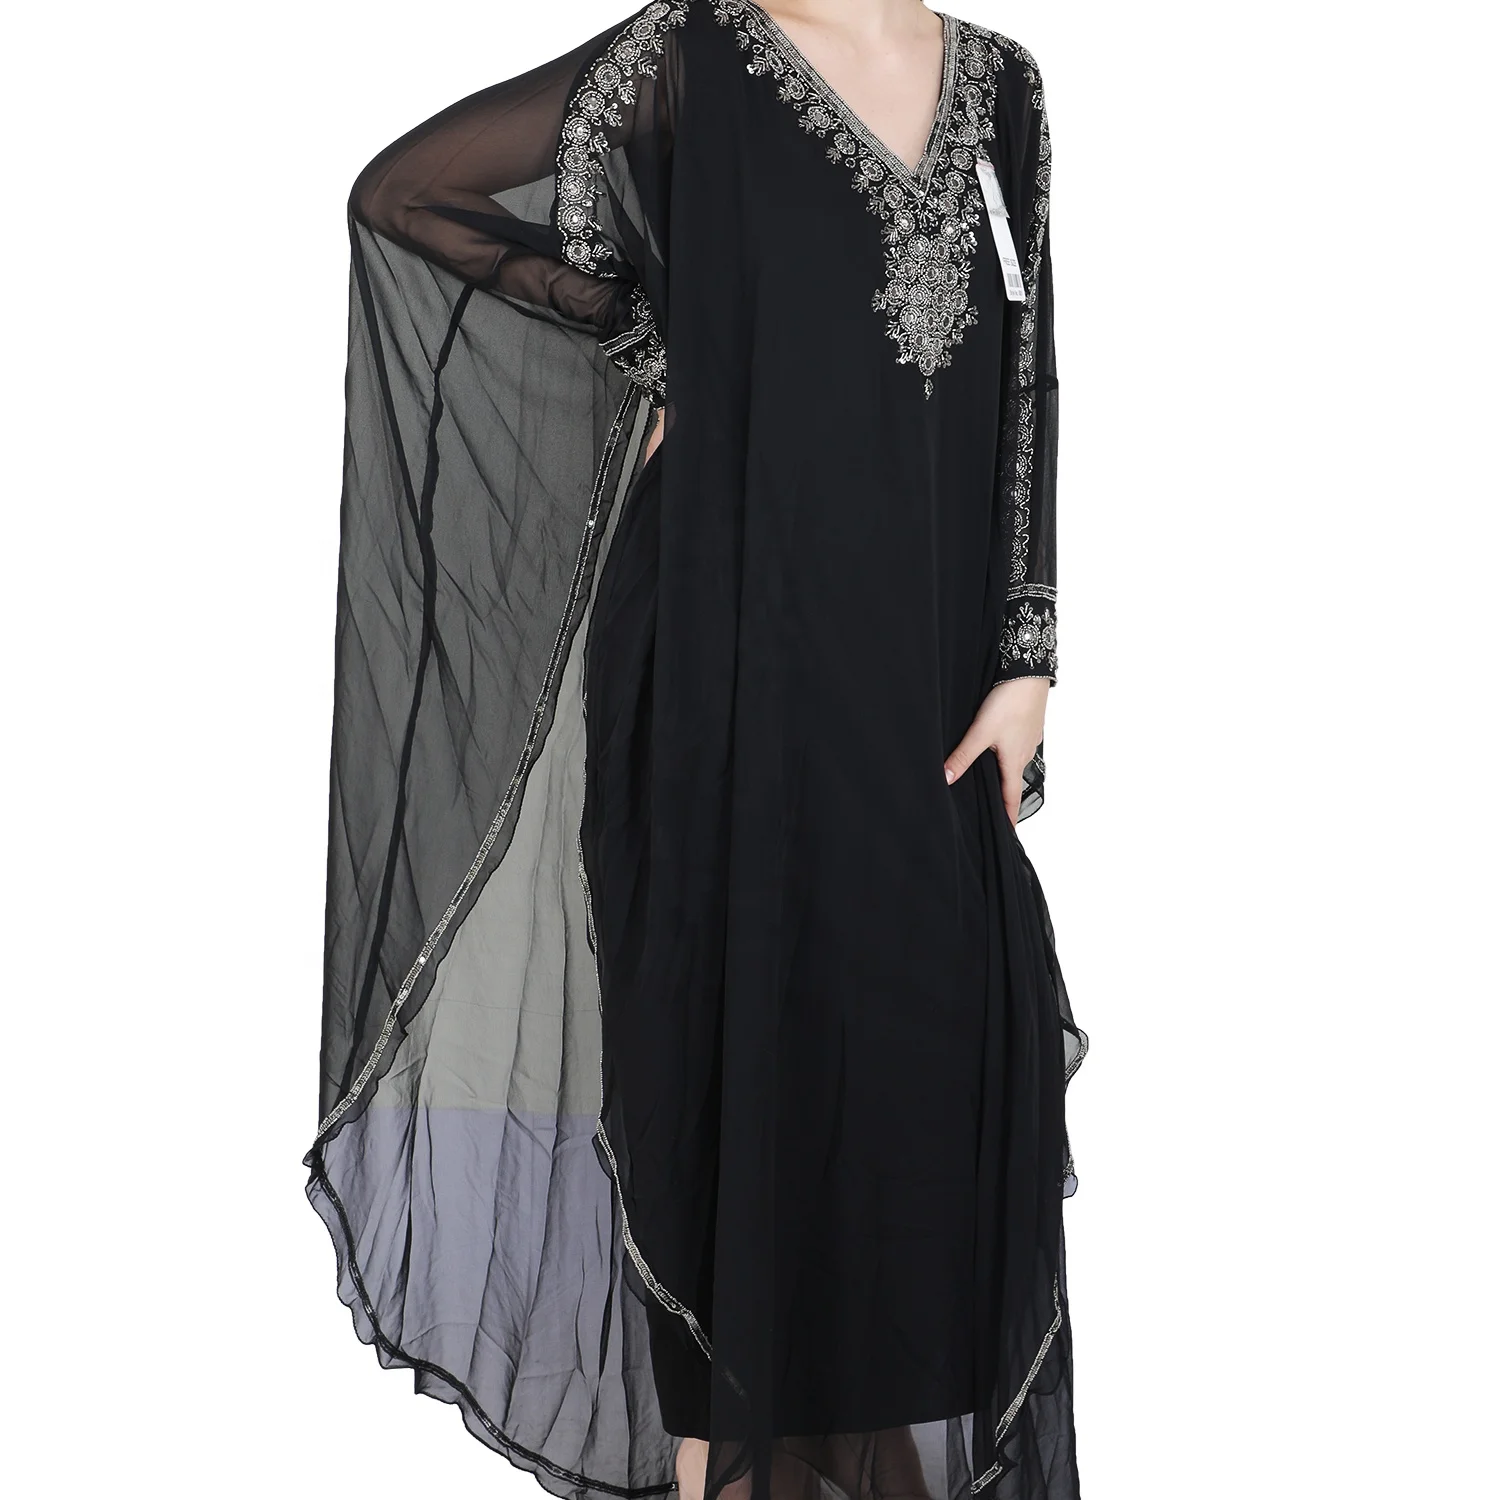 EXCLUSIVE FARASHA FANCY JILBAB ARABIAN FANCY WOMEN DRESS ABAYA DESIGN 6061